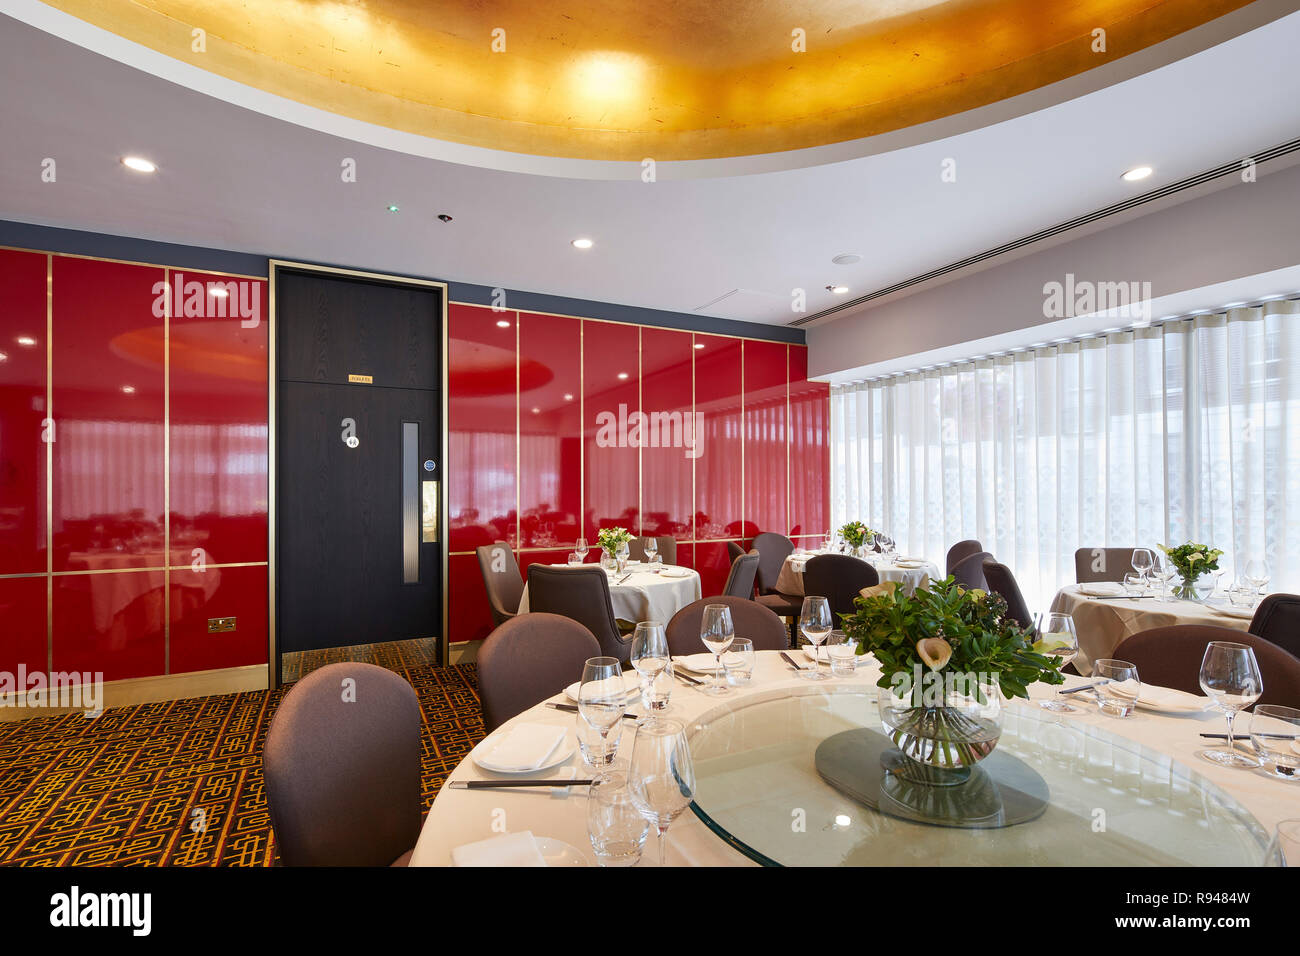 Restaurant seating. Royal China Club, London, United Kingdom. Architect: Stiff + Trevillion Architects, 2018. Stock Photo